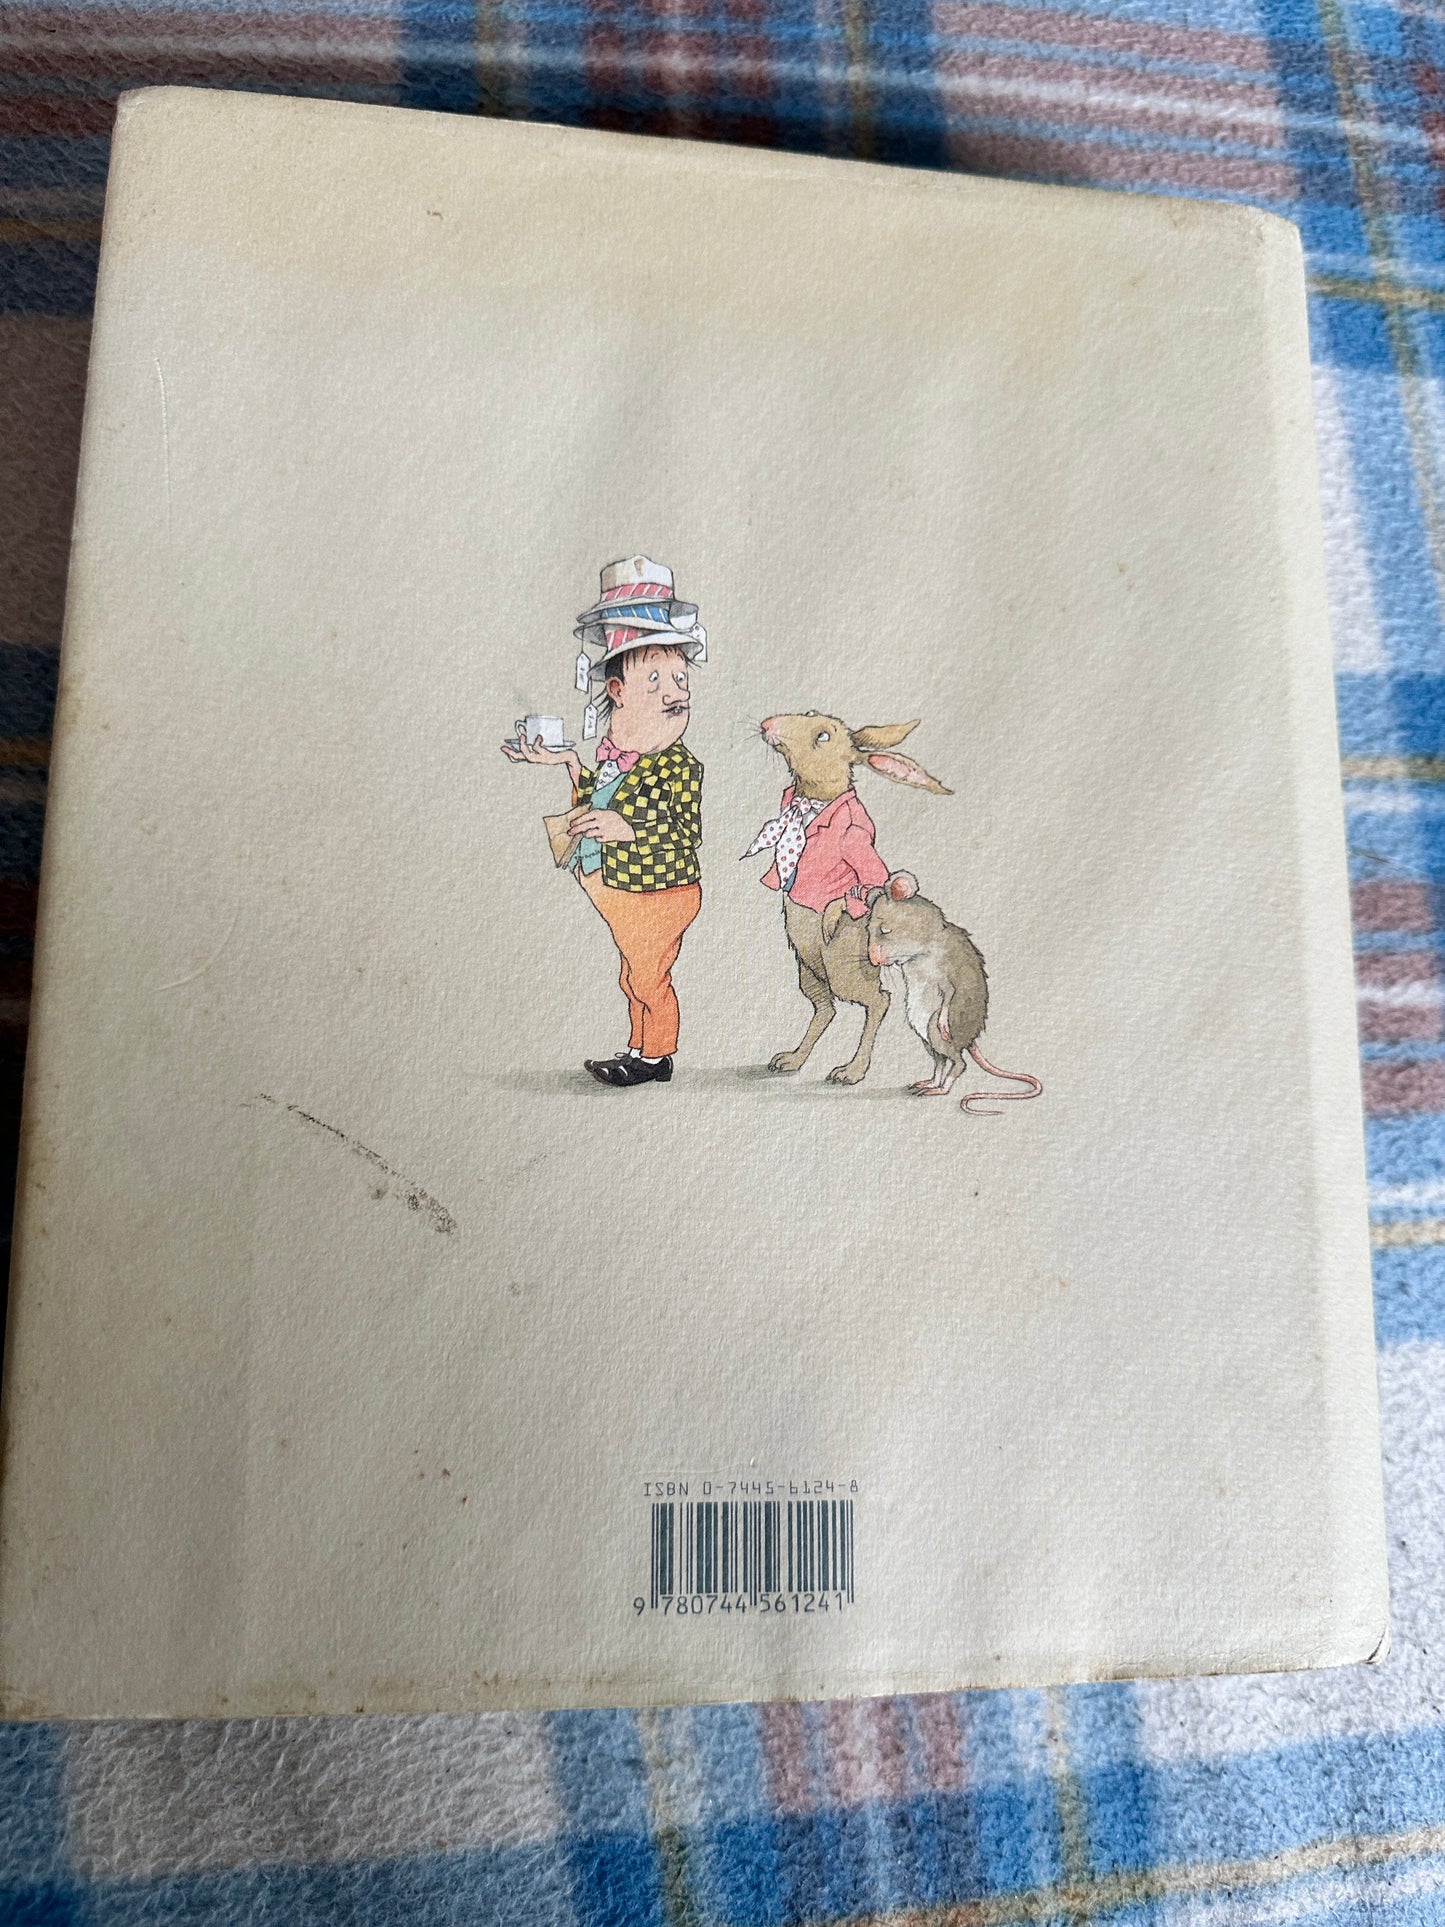 1999 Alice’s Adventures In Wonderland - Lewis Carroll(Helen Oxenbury illustration)Walker Books